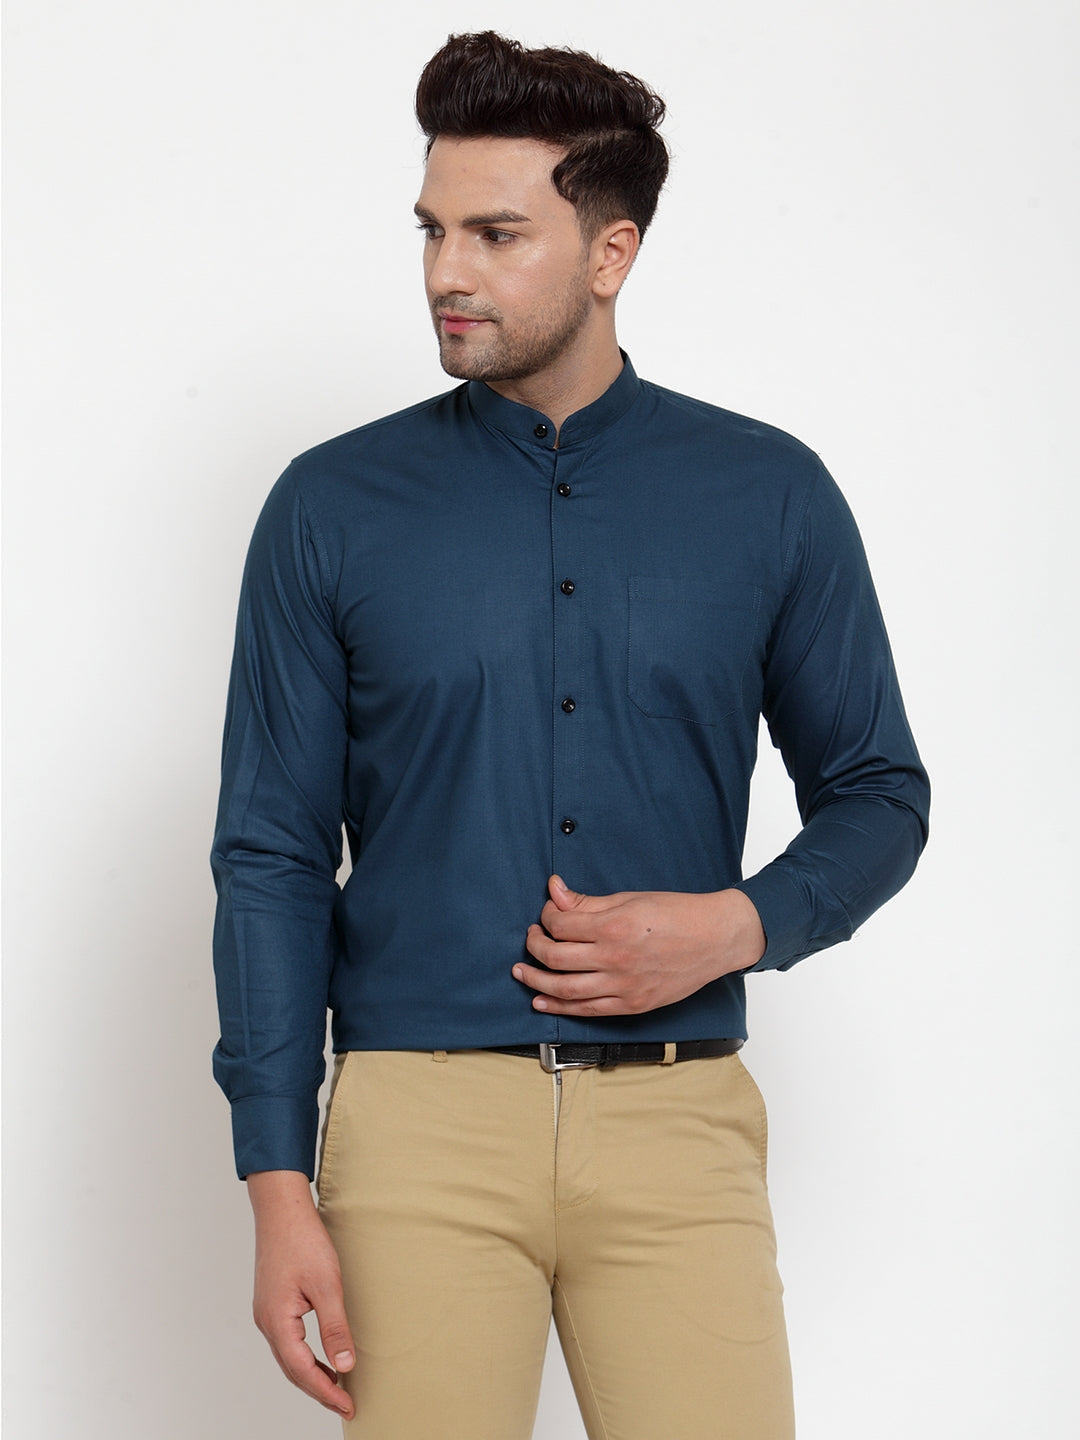 Men's Navy Cotton Solid Mandarin Collar Formal Shirts ( SF 726Teal ) - Jainish